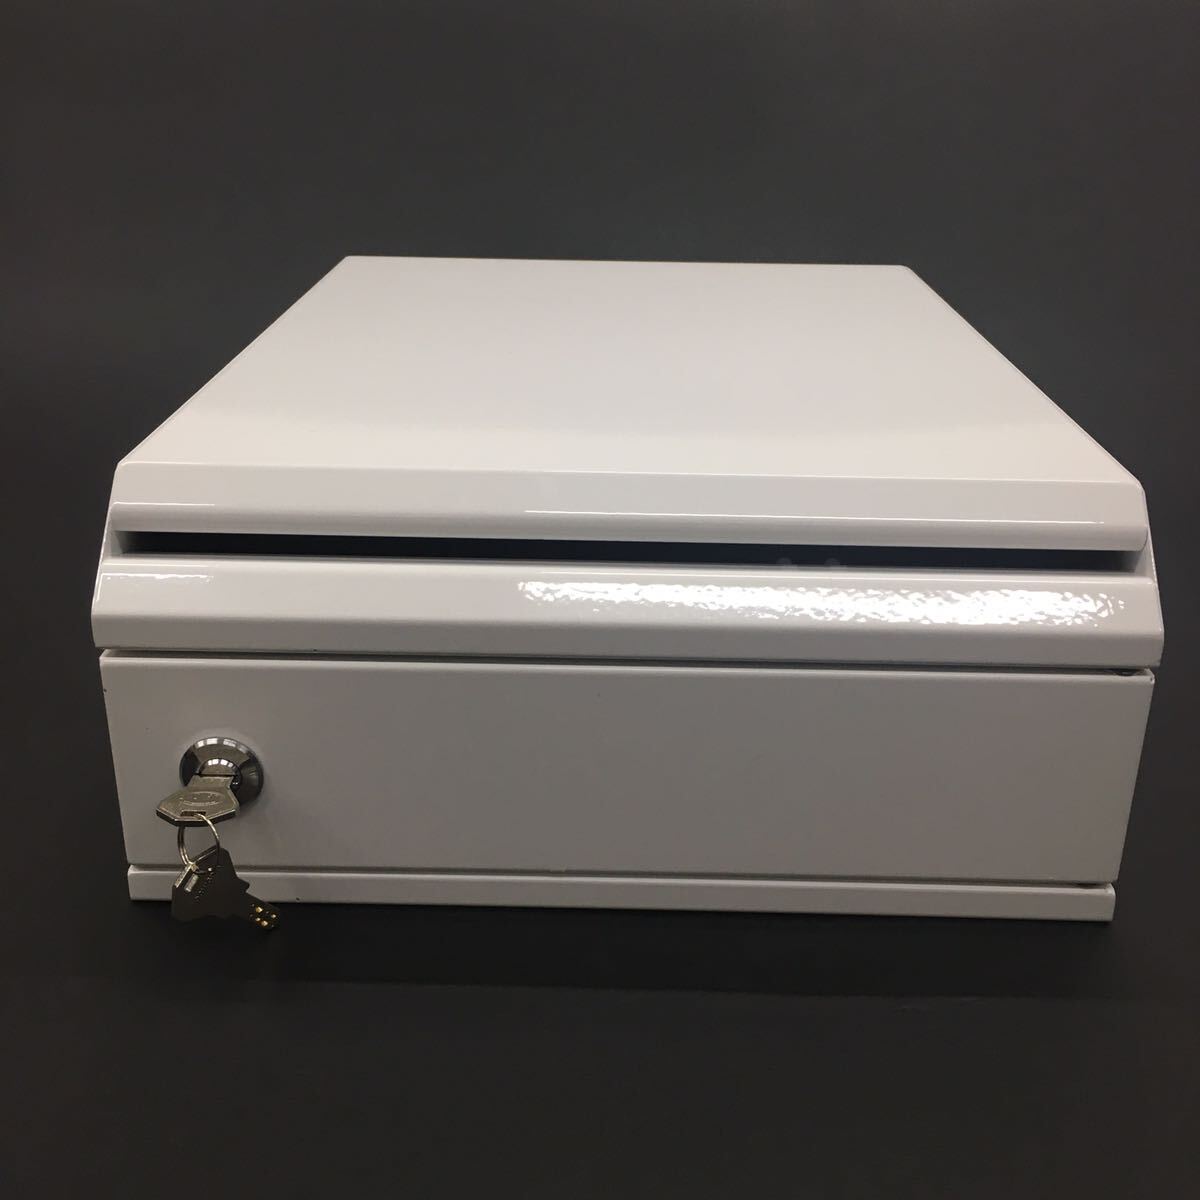 ⑨ BUNBUKU ぶんぶく 機密書類回収ボックス 卓上タイプ KIM-S-6 鍵2個付き スチール製 ホワイト 白